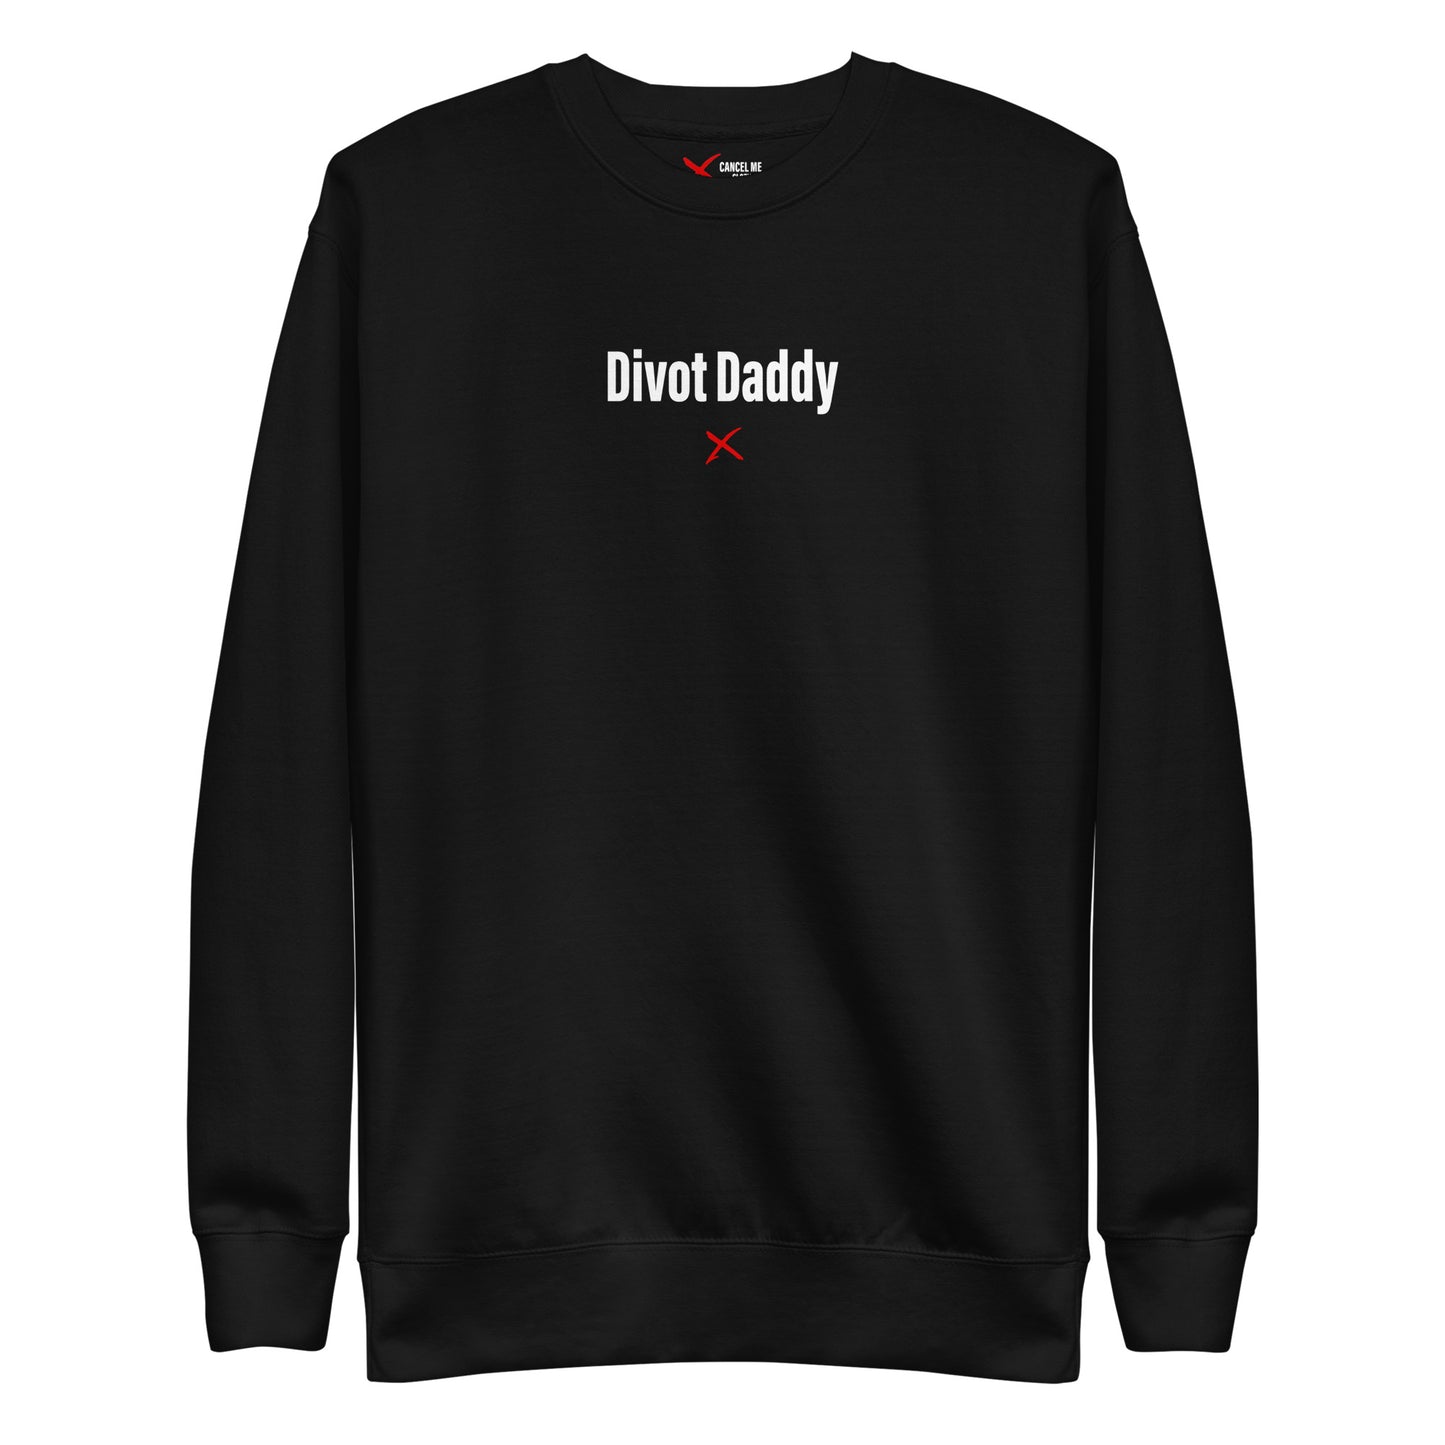 Divot Daddy - Sweatshirt